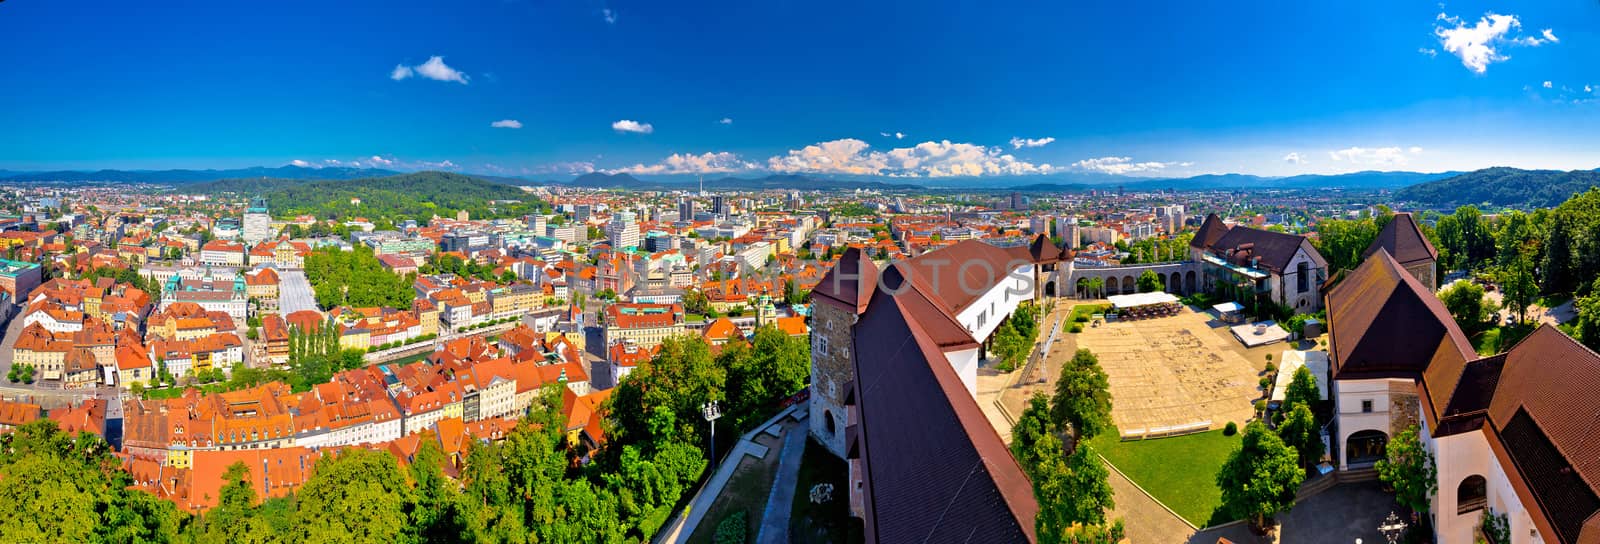 Colorful Ljubljana aerial panoramic view by xbrchx